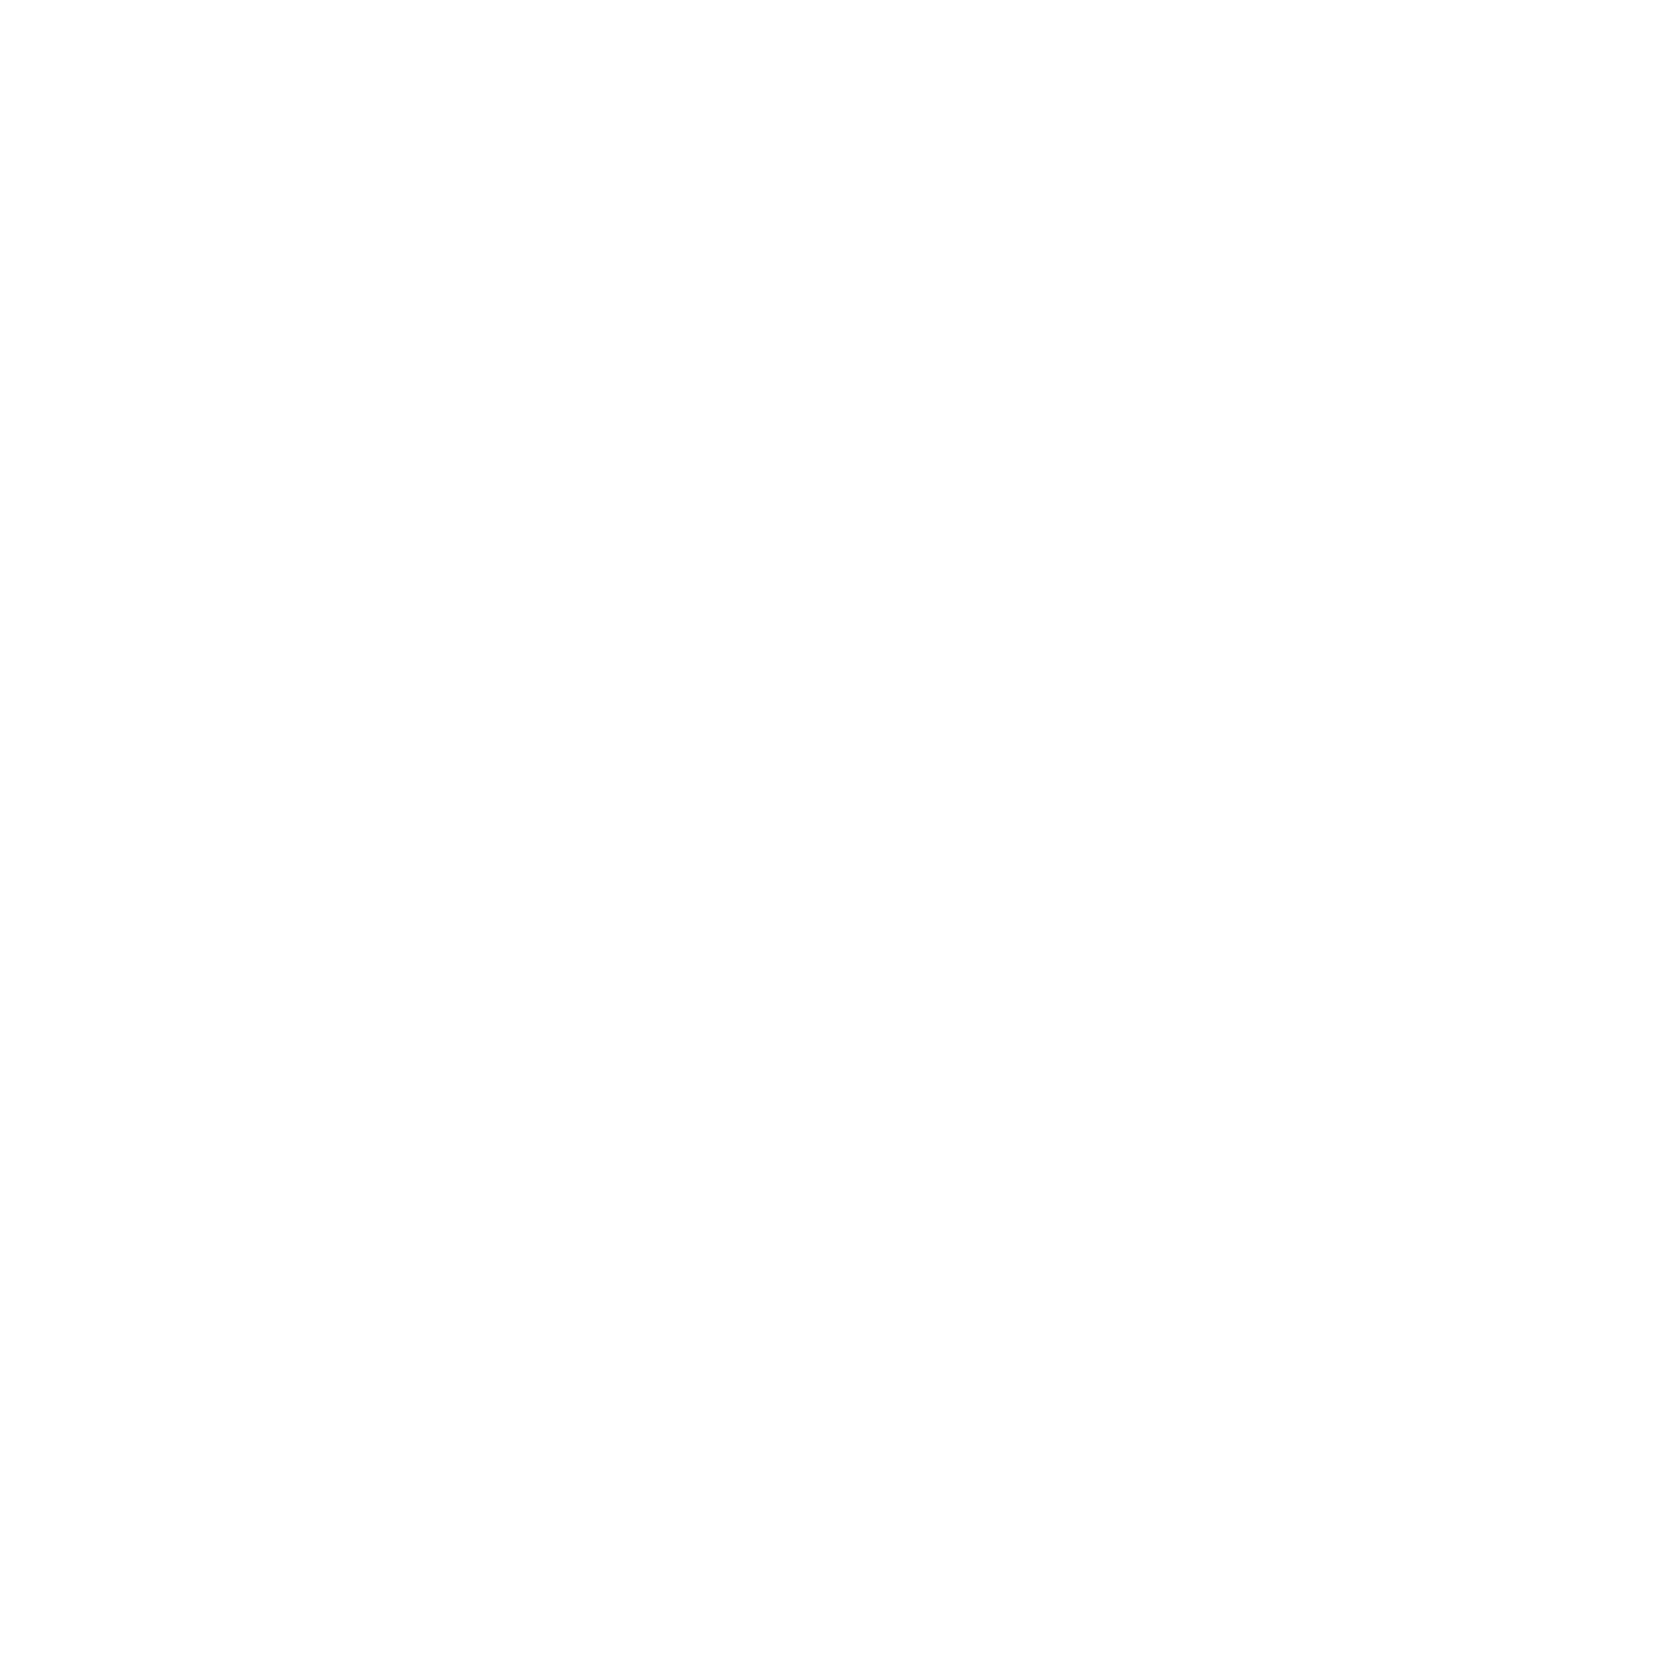 Чистокровный жеребец-производитель Мазхар Шаэль, ахалтекинец на фото, Машкова Елена, Elena Mashkova, фотограф